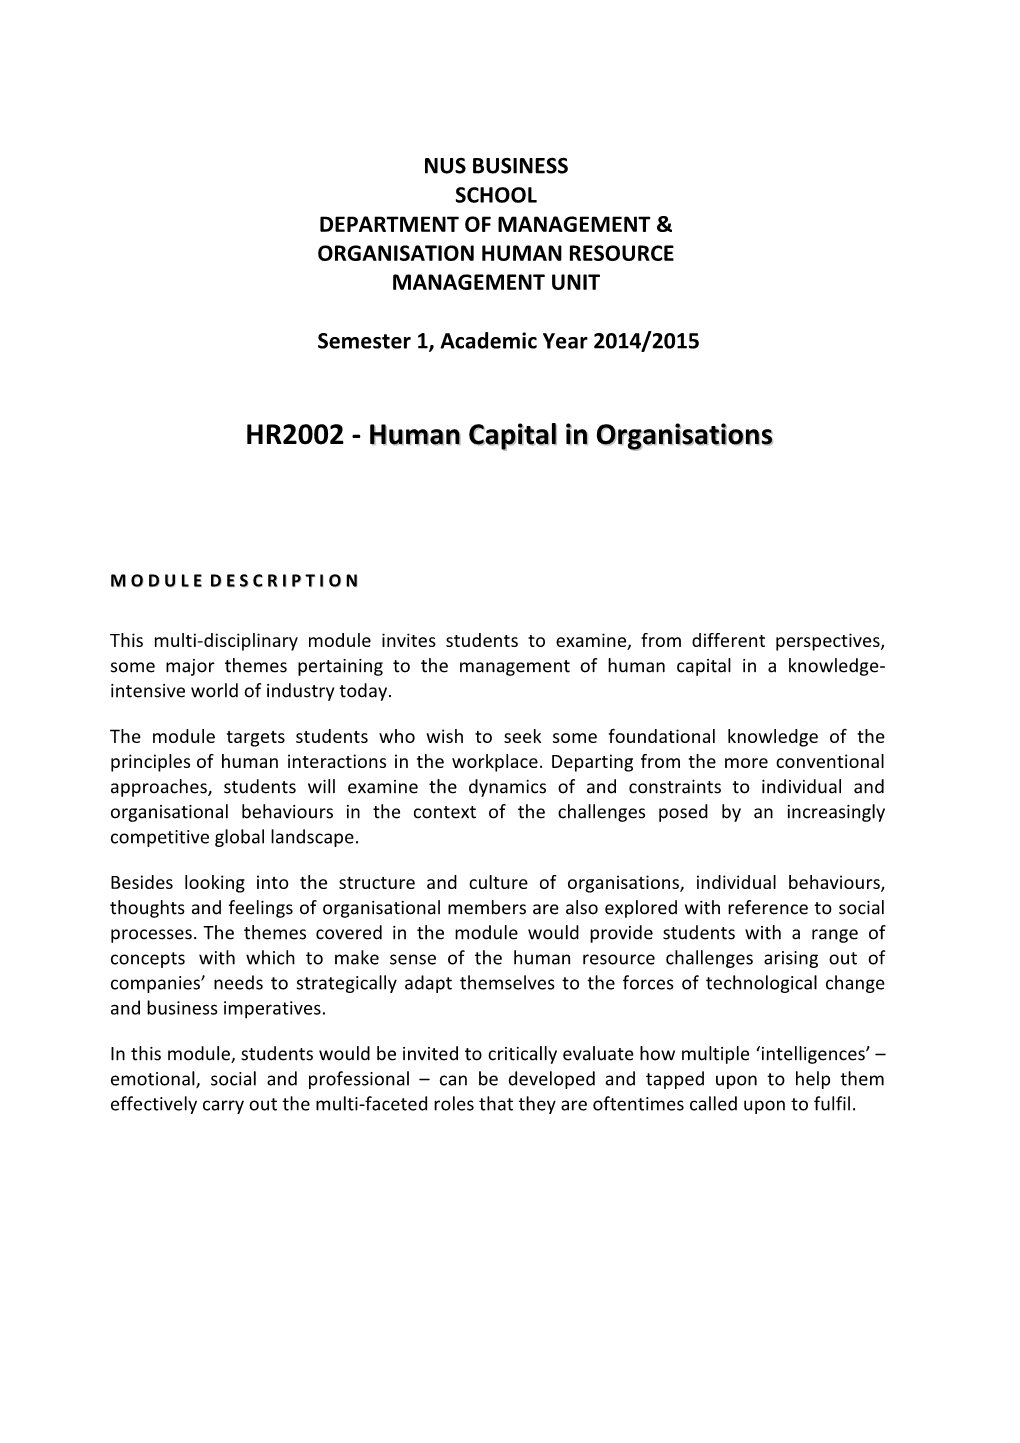 Department of Managementorganisation Humanresource Management Unit